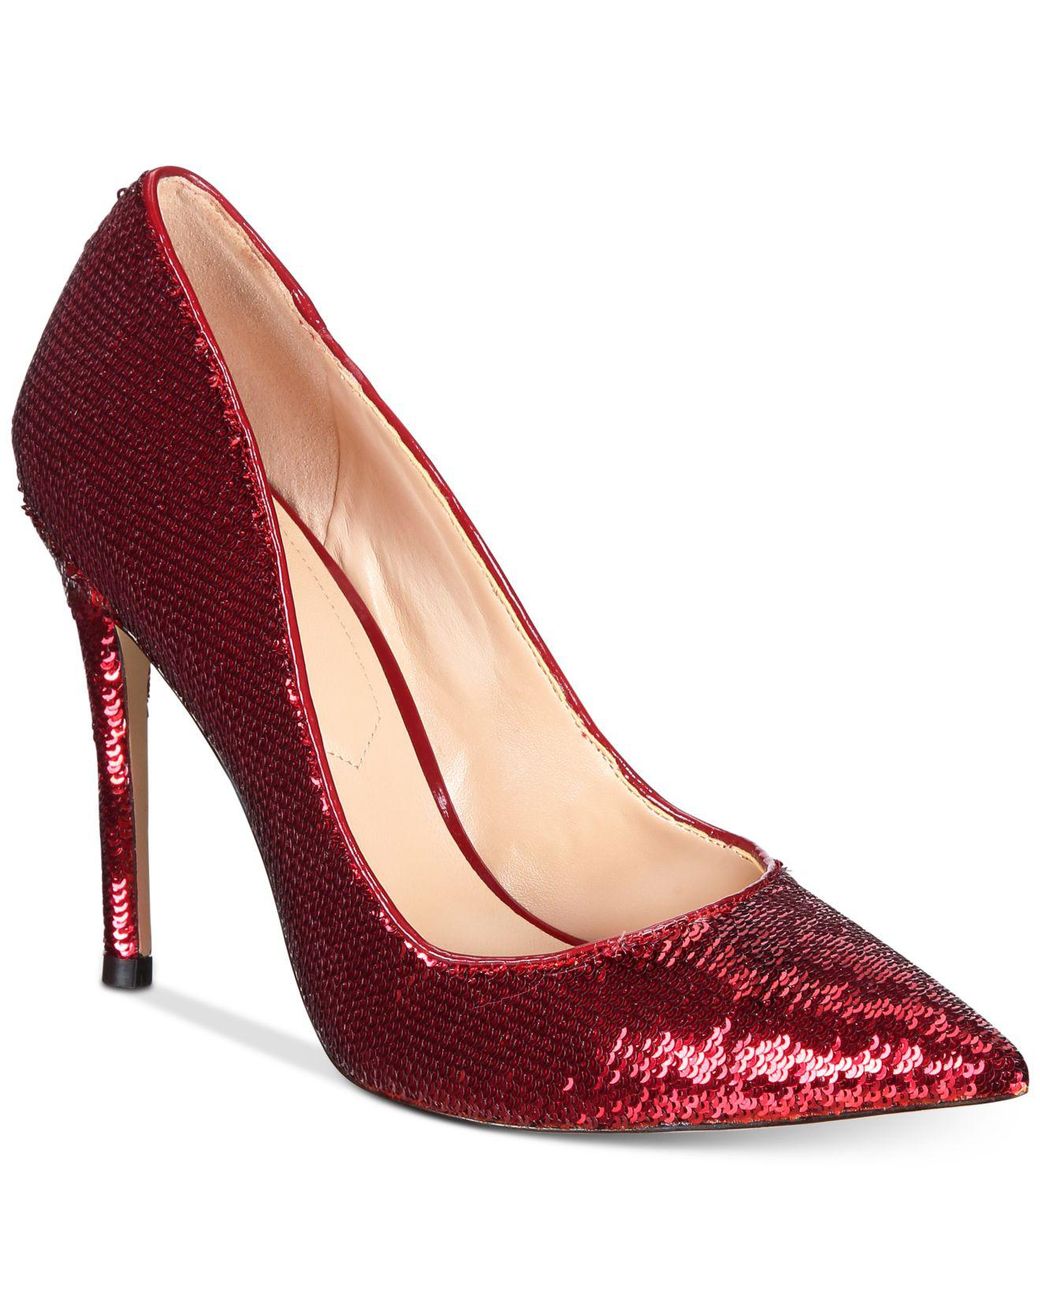 Glitter heels Bordelle Red size 7 US in Glitter - 20491181